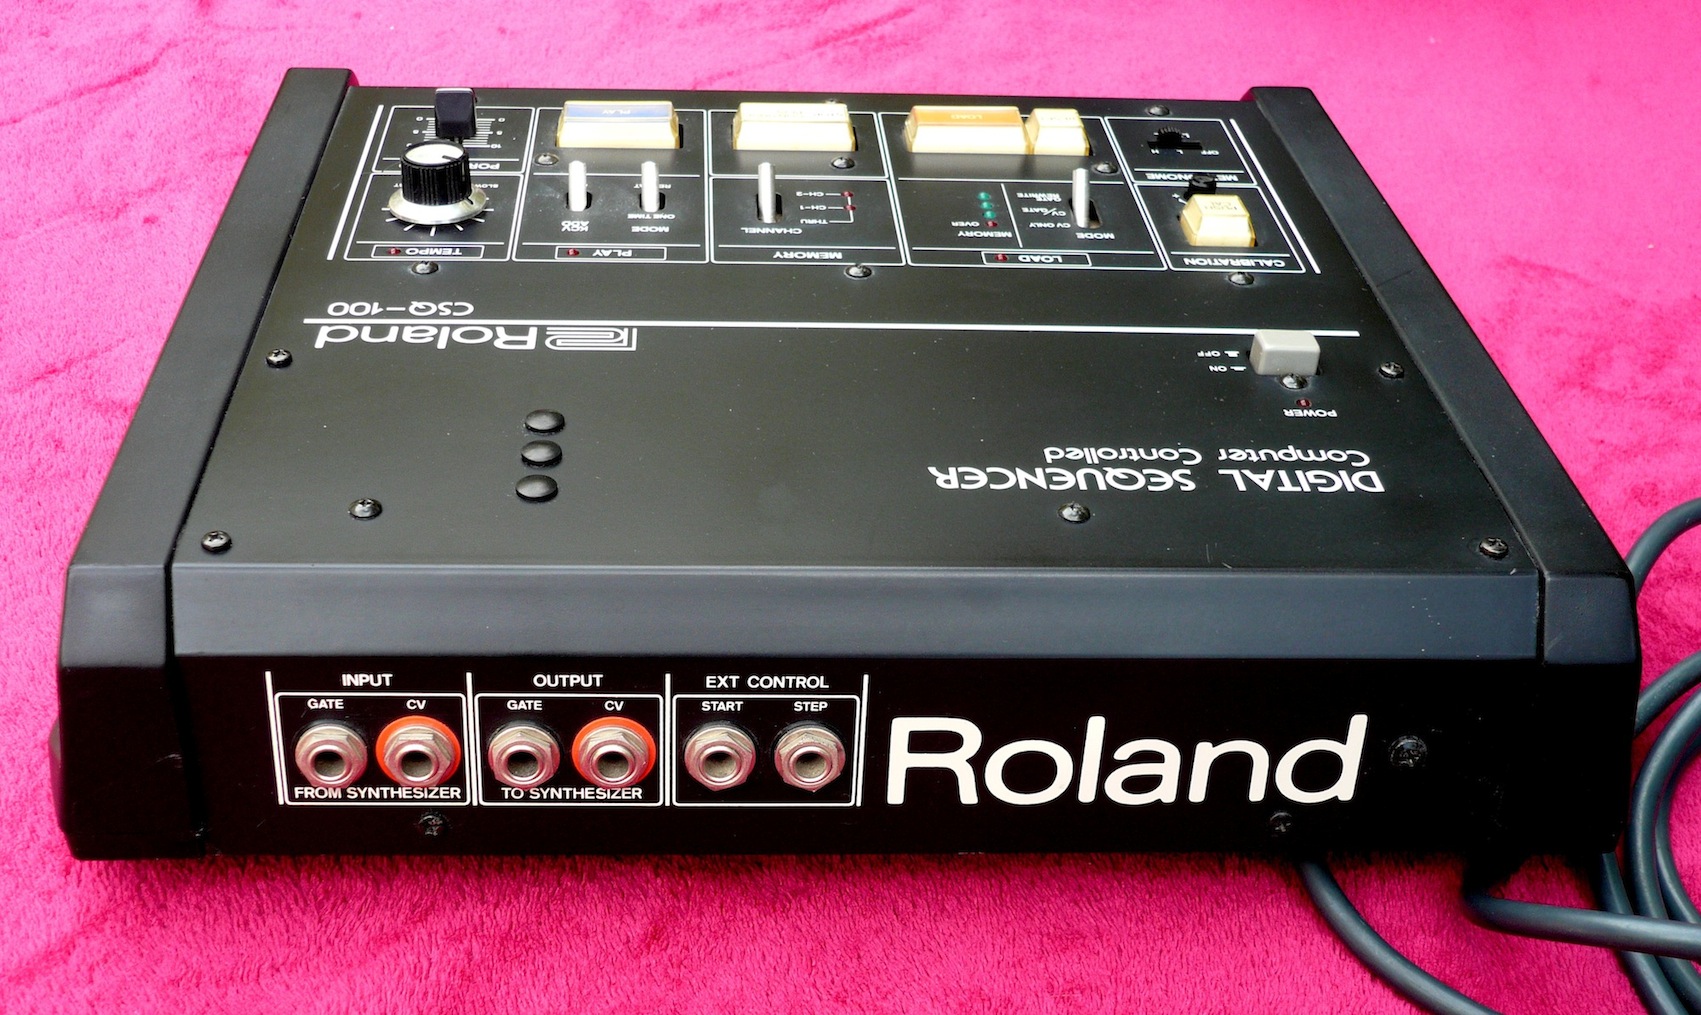 Roland CSQ-100 (1979) digital sequencer